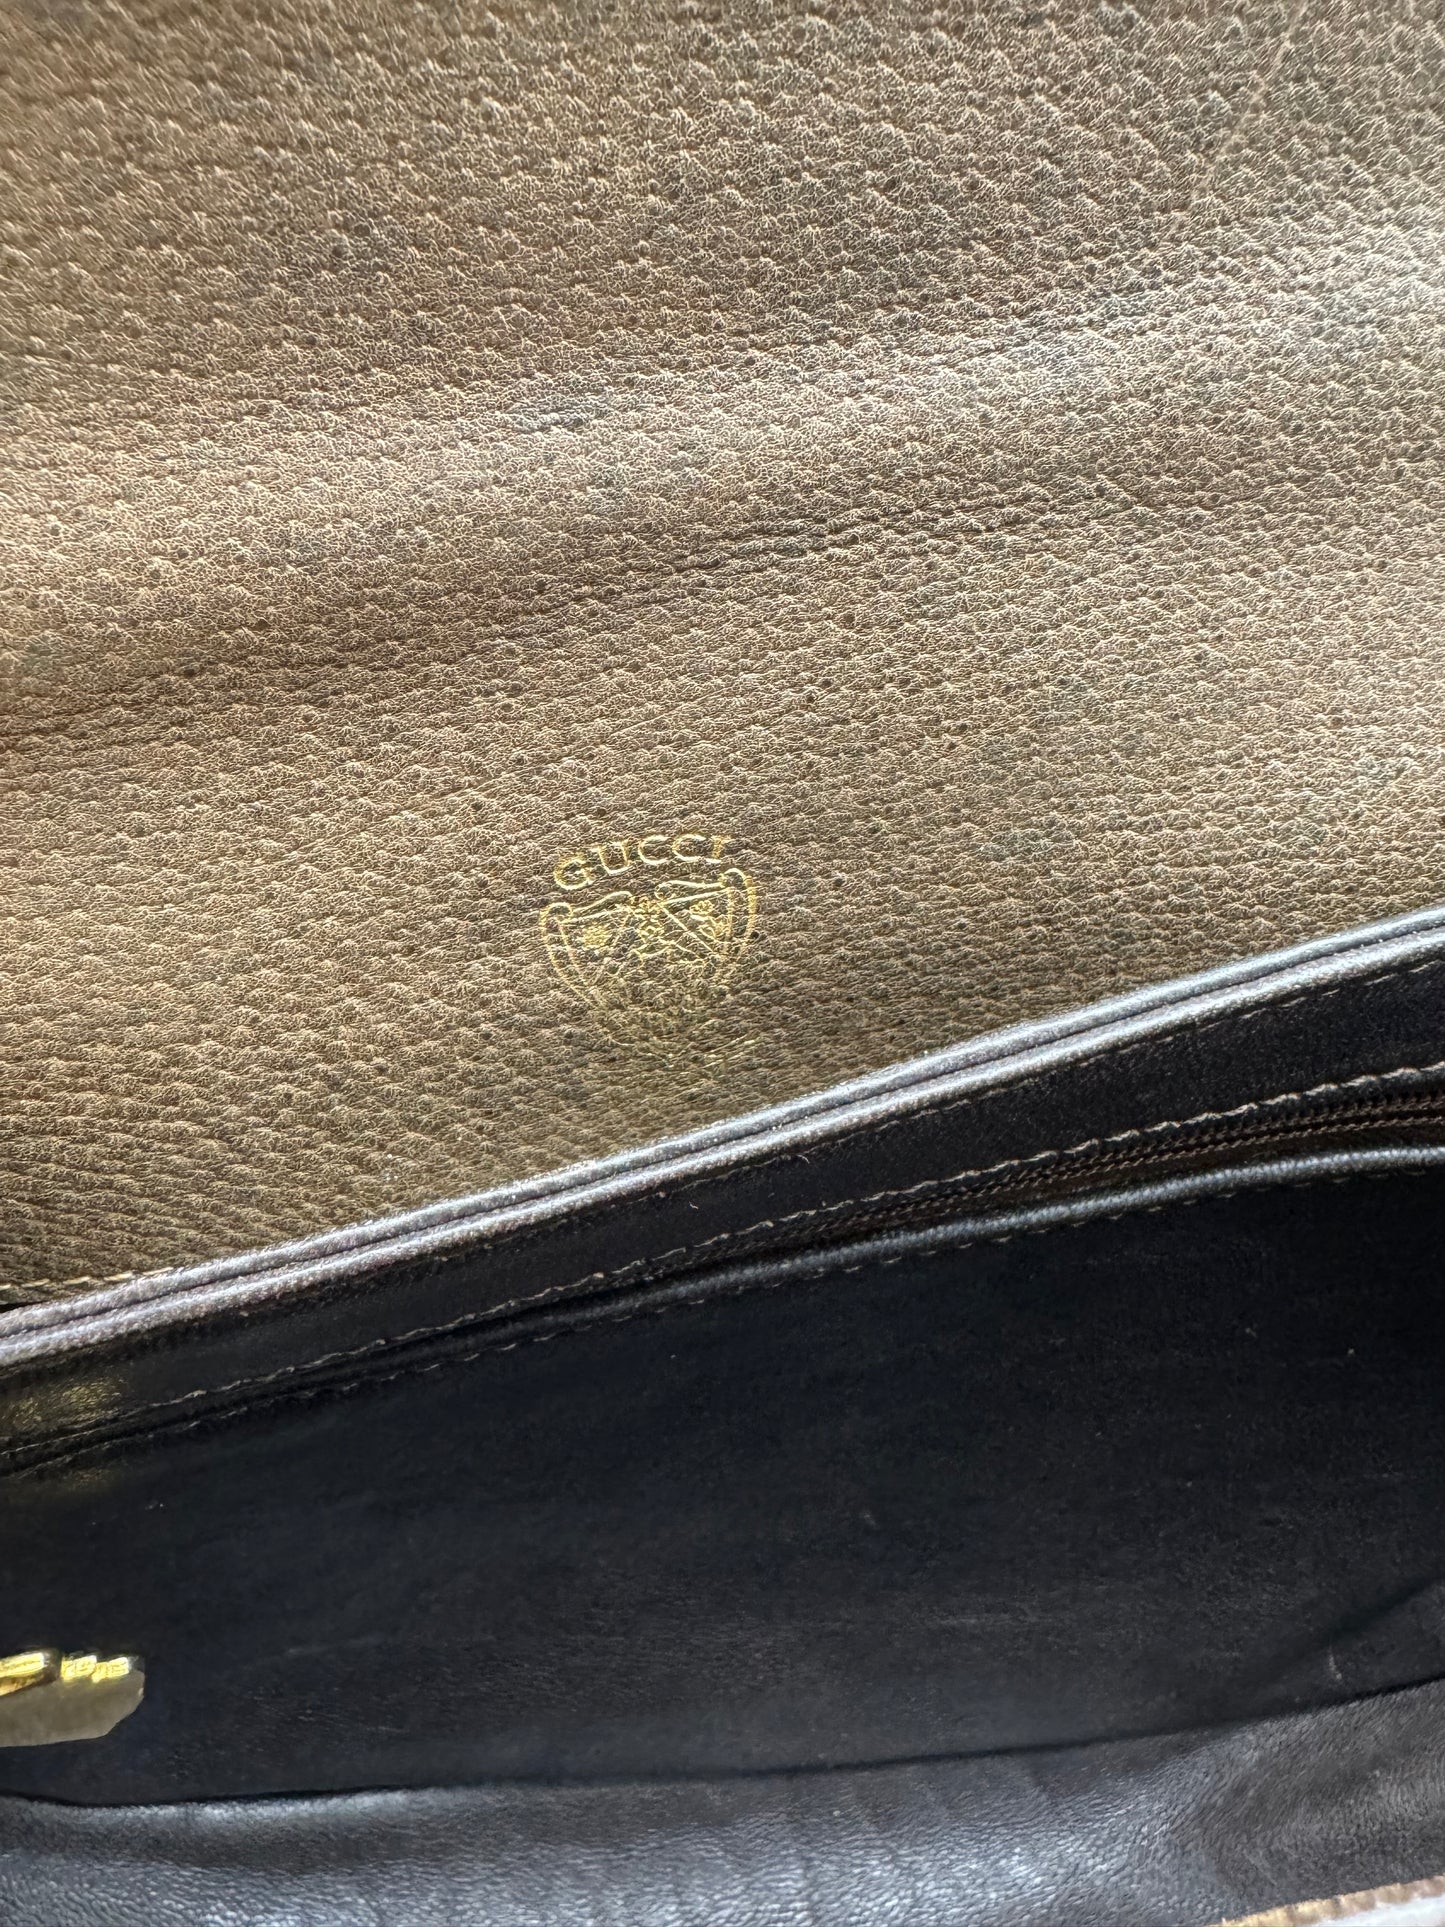 Authentic GUCCI Vintage Brown Leather Top Handbag